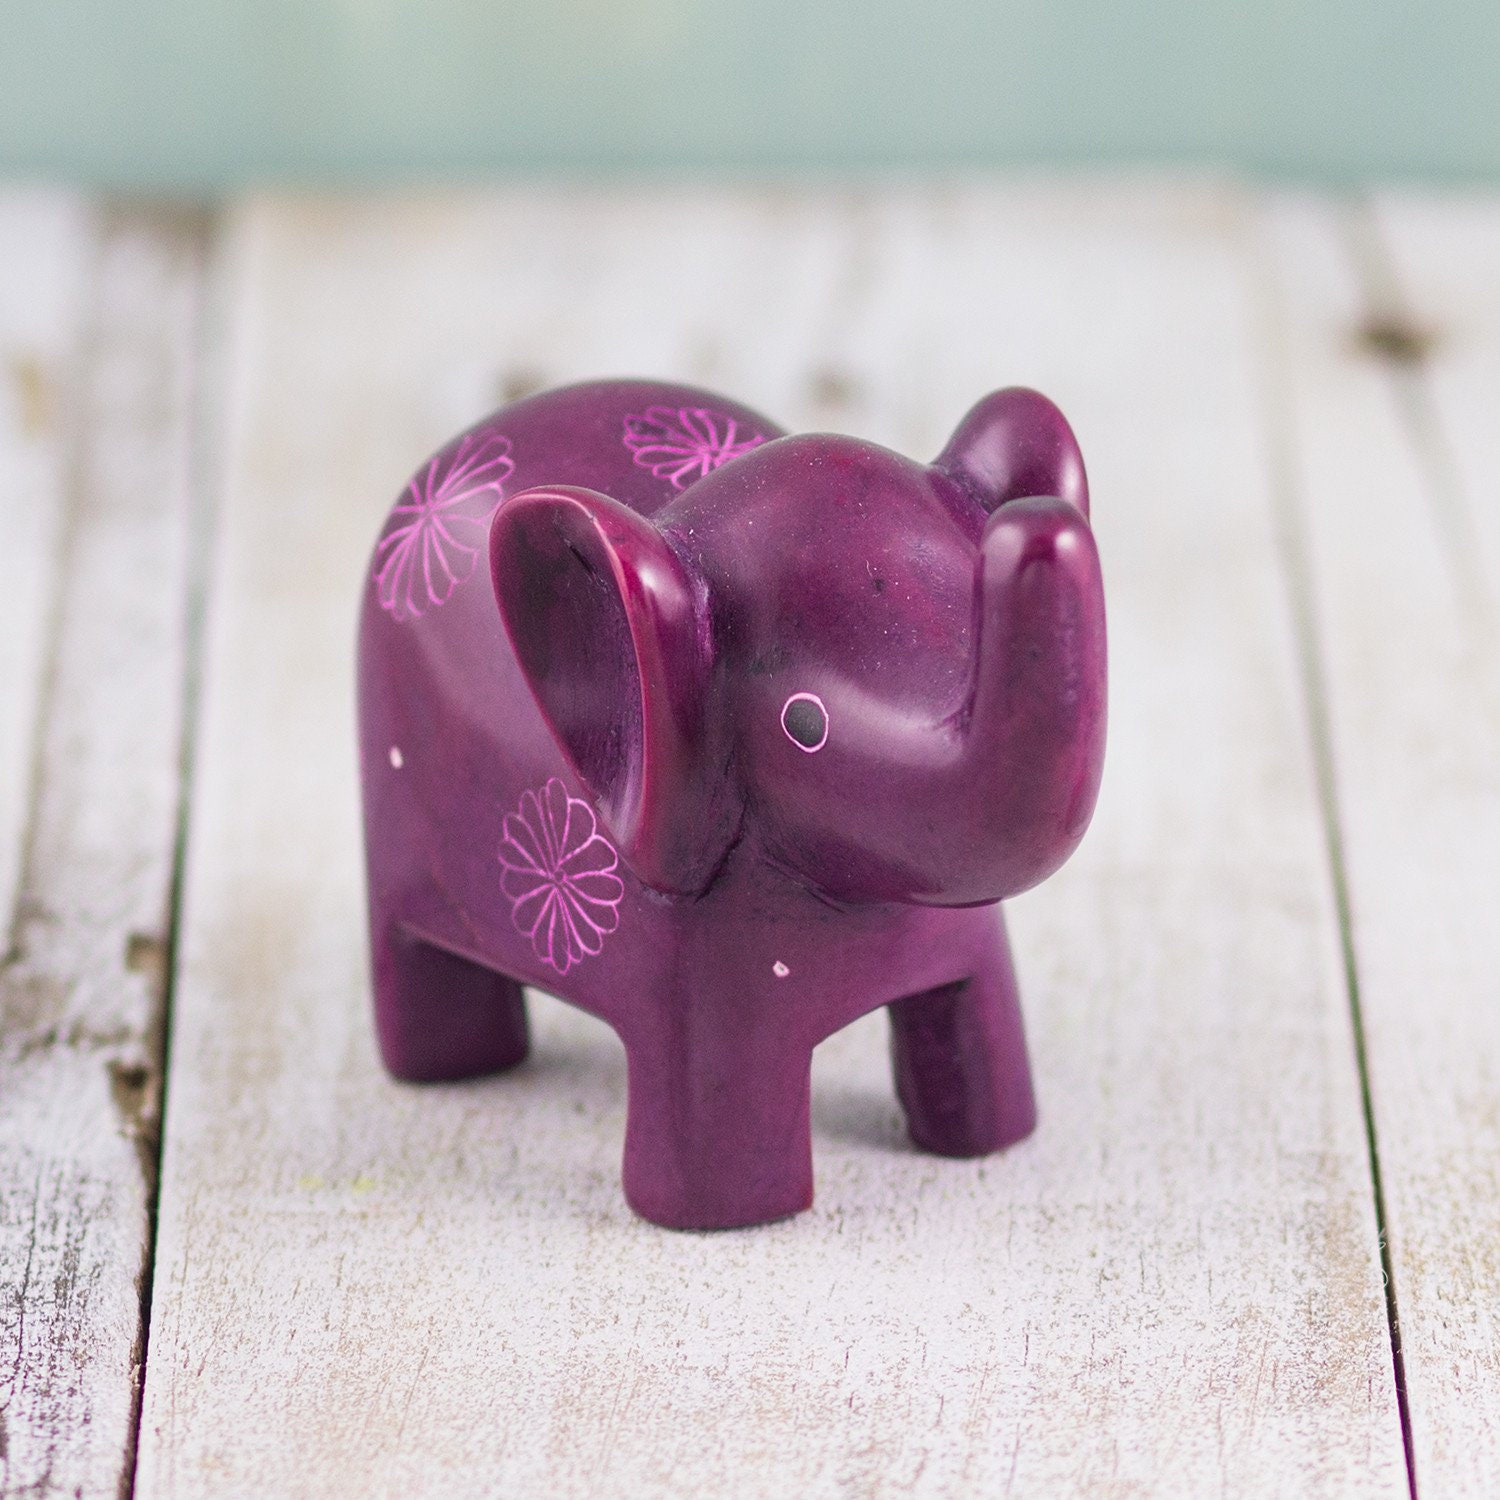 Elephant Soapstone Carving Kit – The Hobbyists Hideout